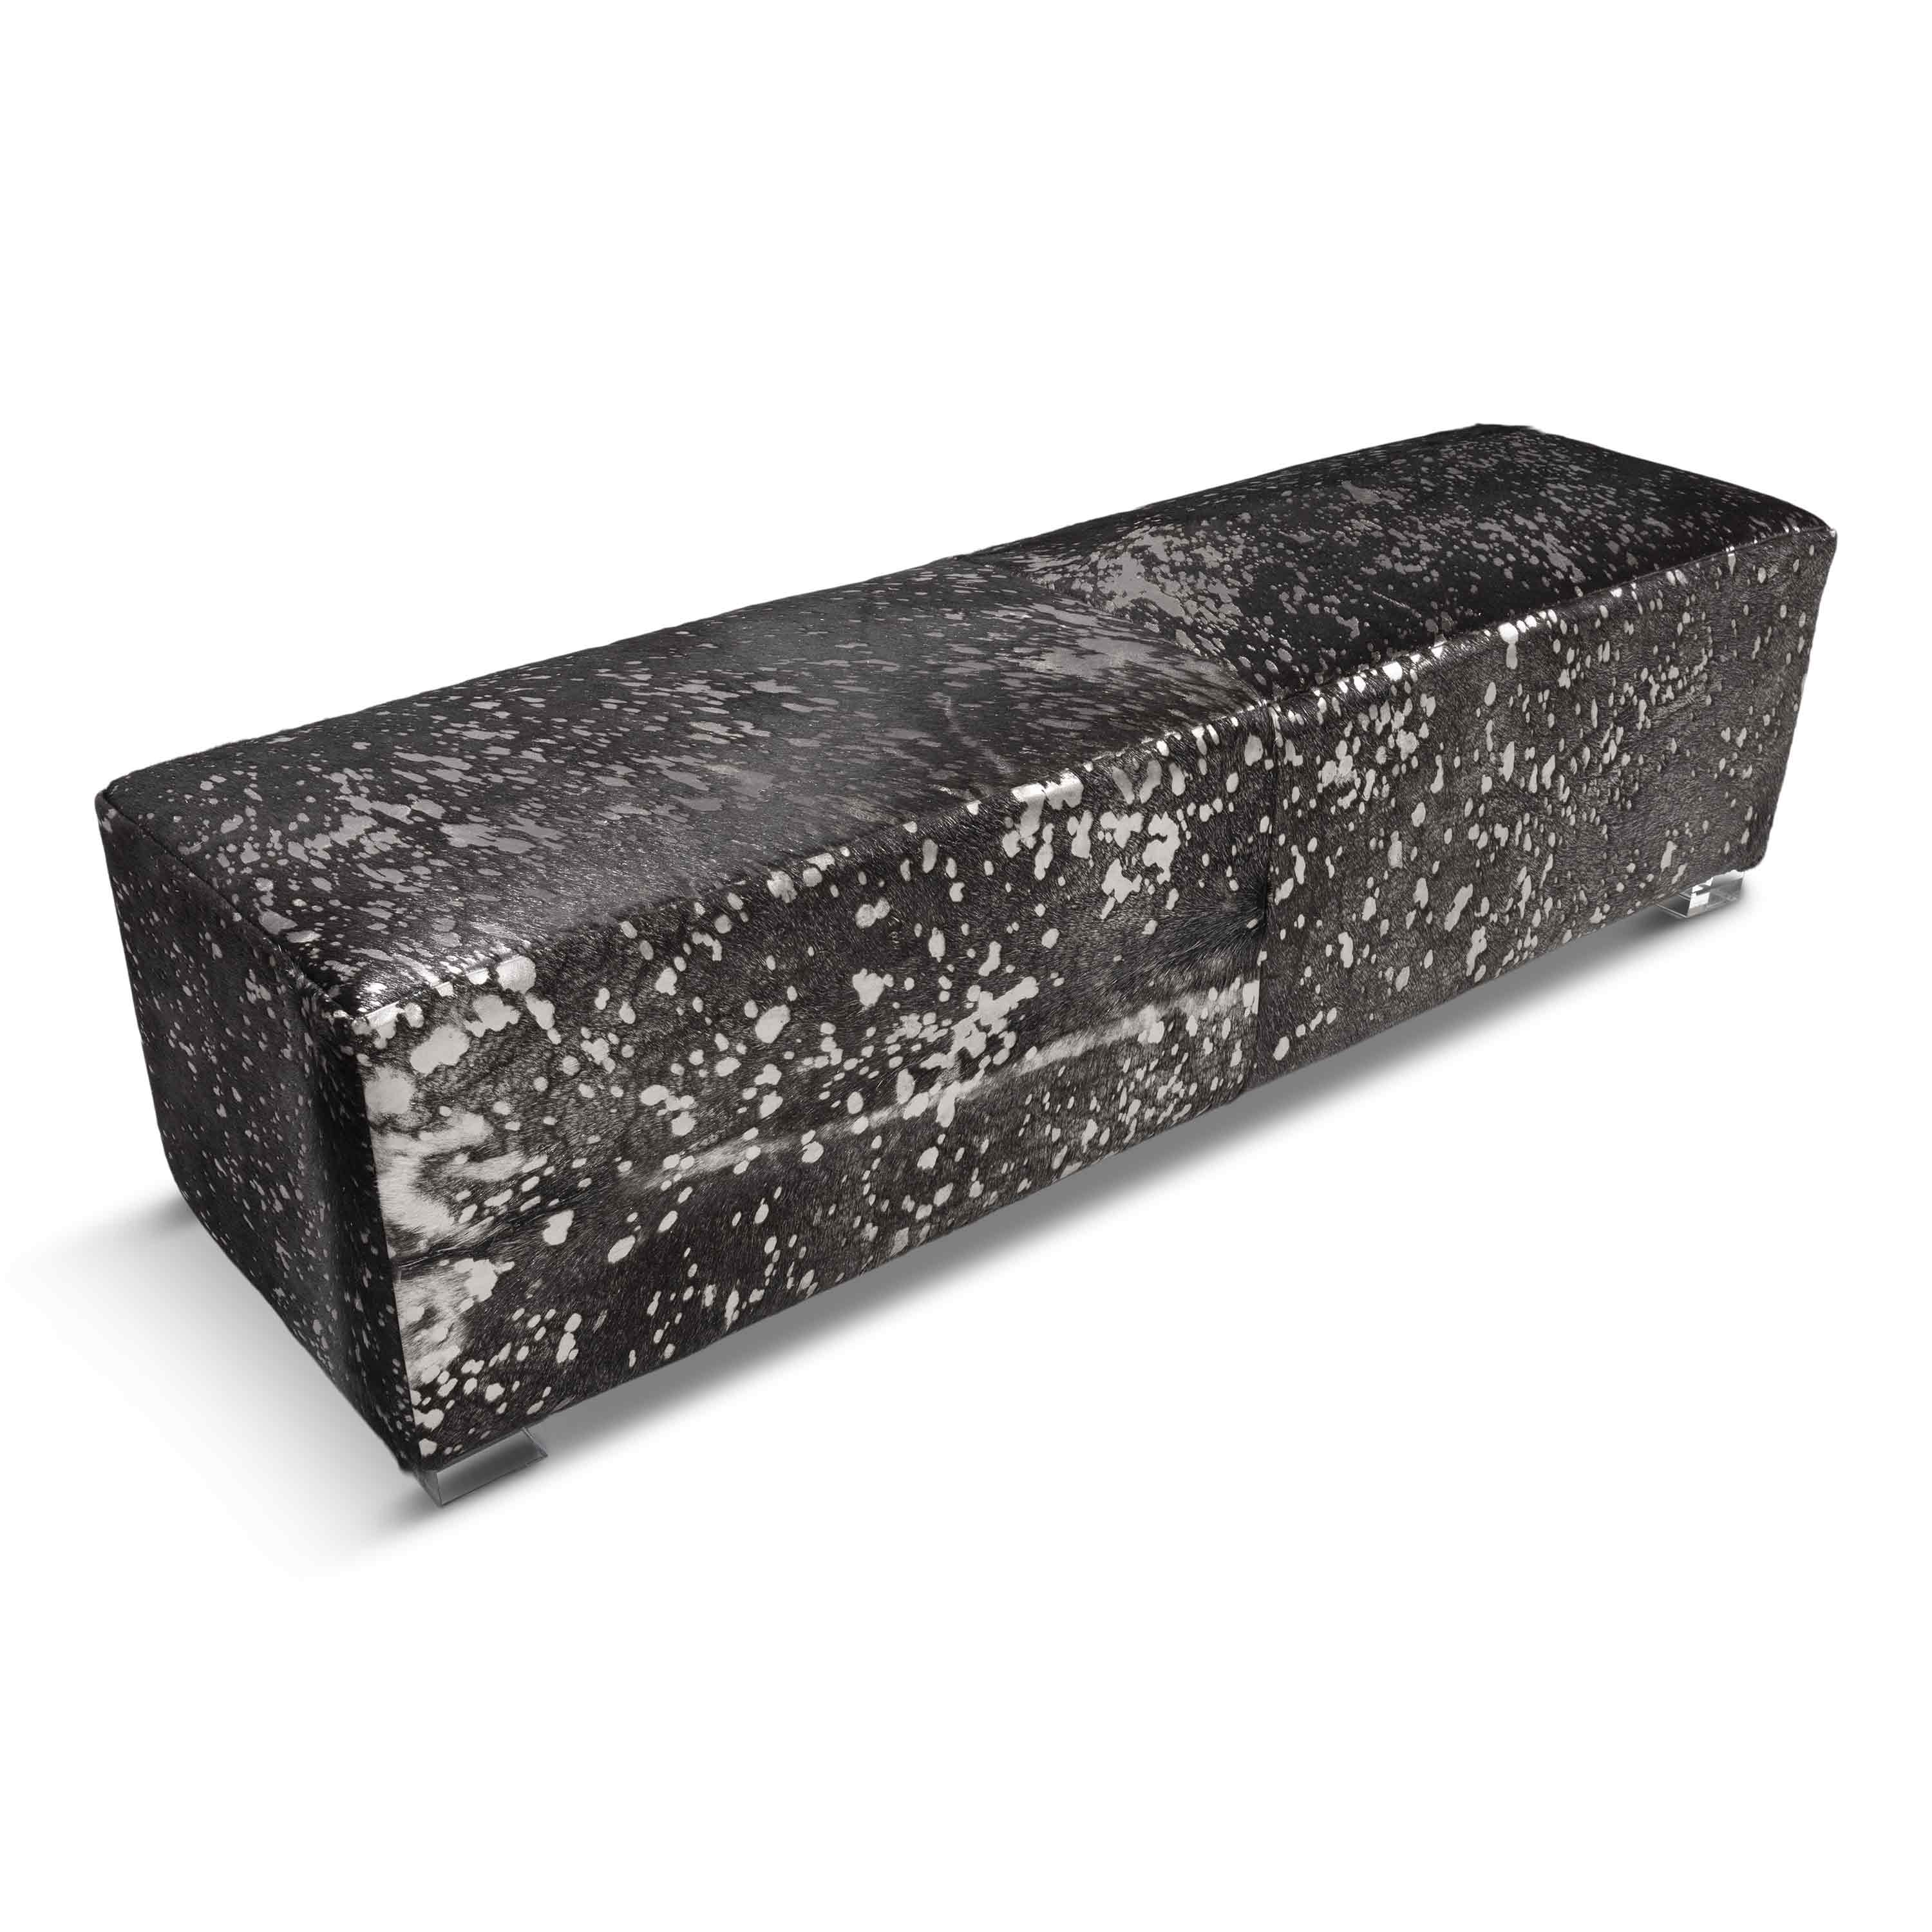 Bonanza Bench in Black Silver Speckled Cowhide - ModShop